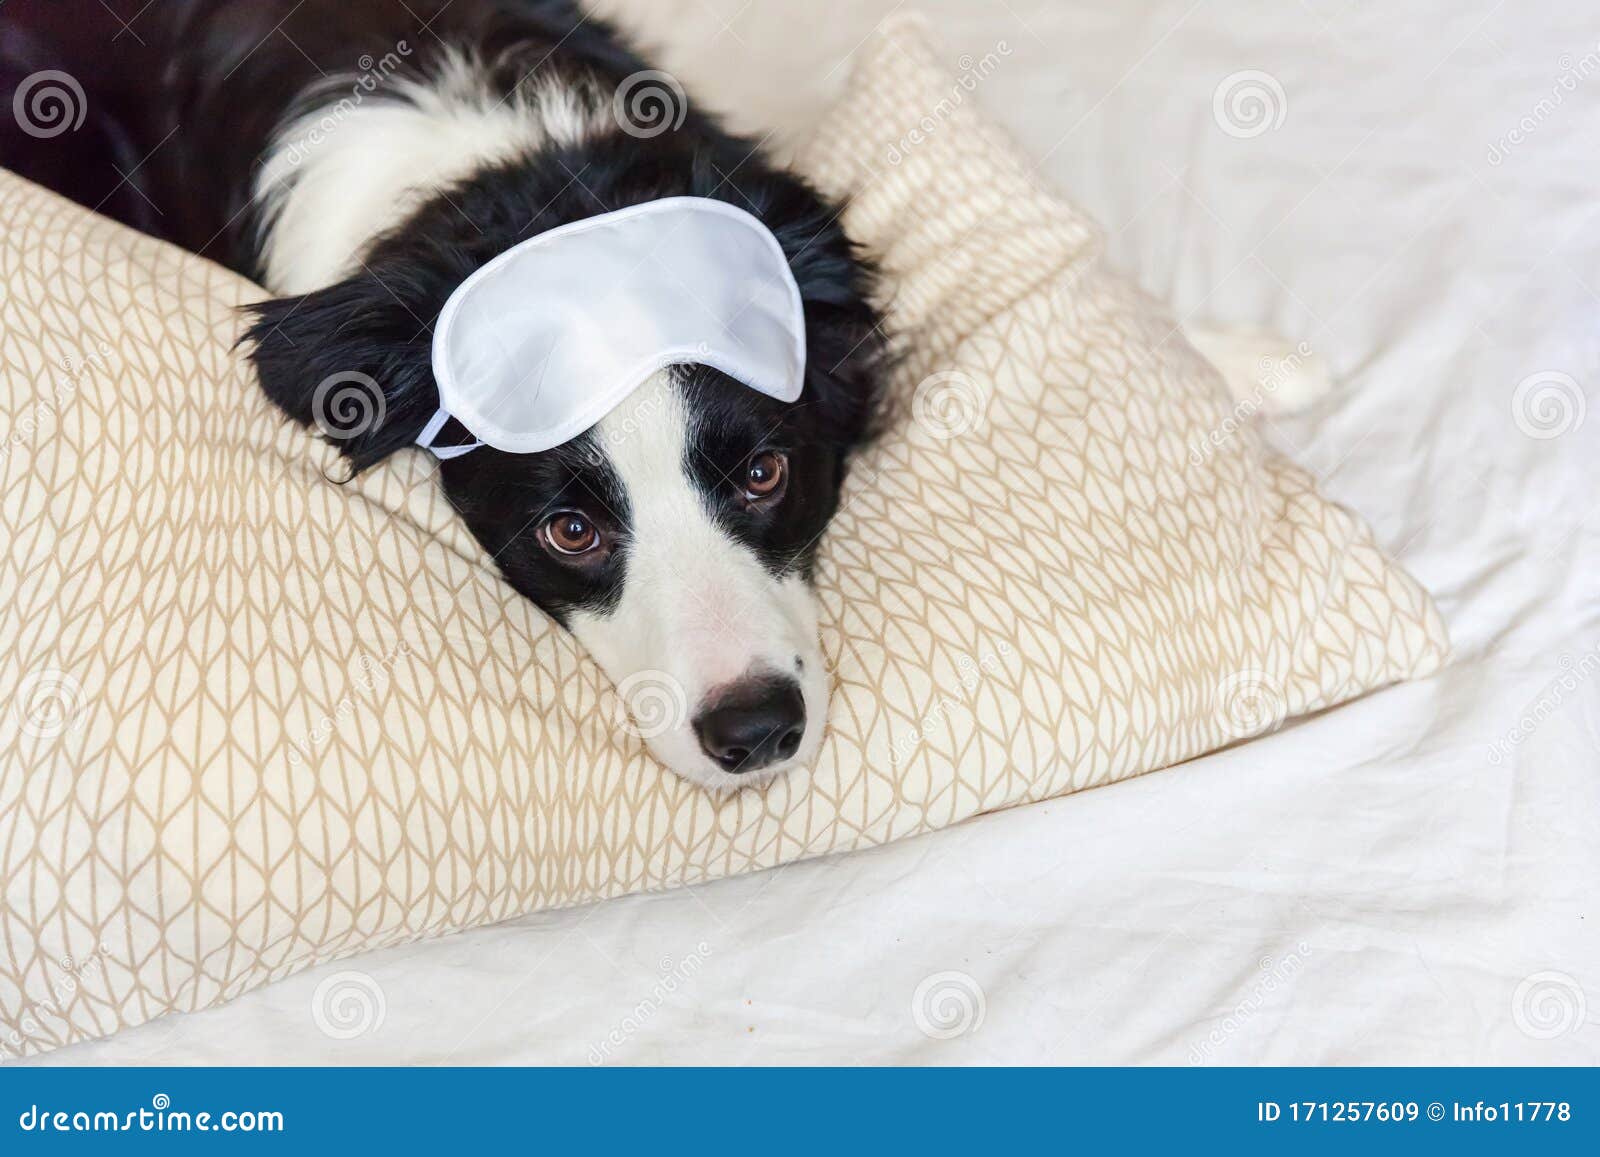 Do Not Disturb Me Let Me Sleep. Funny Puppy Border Collie